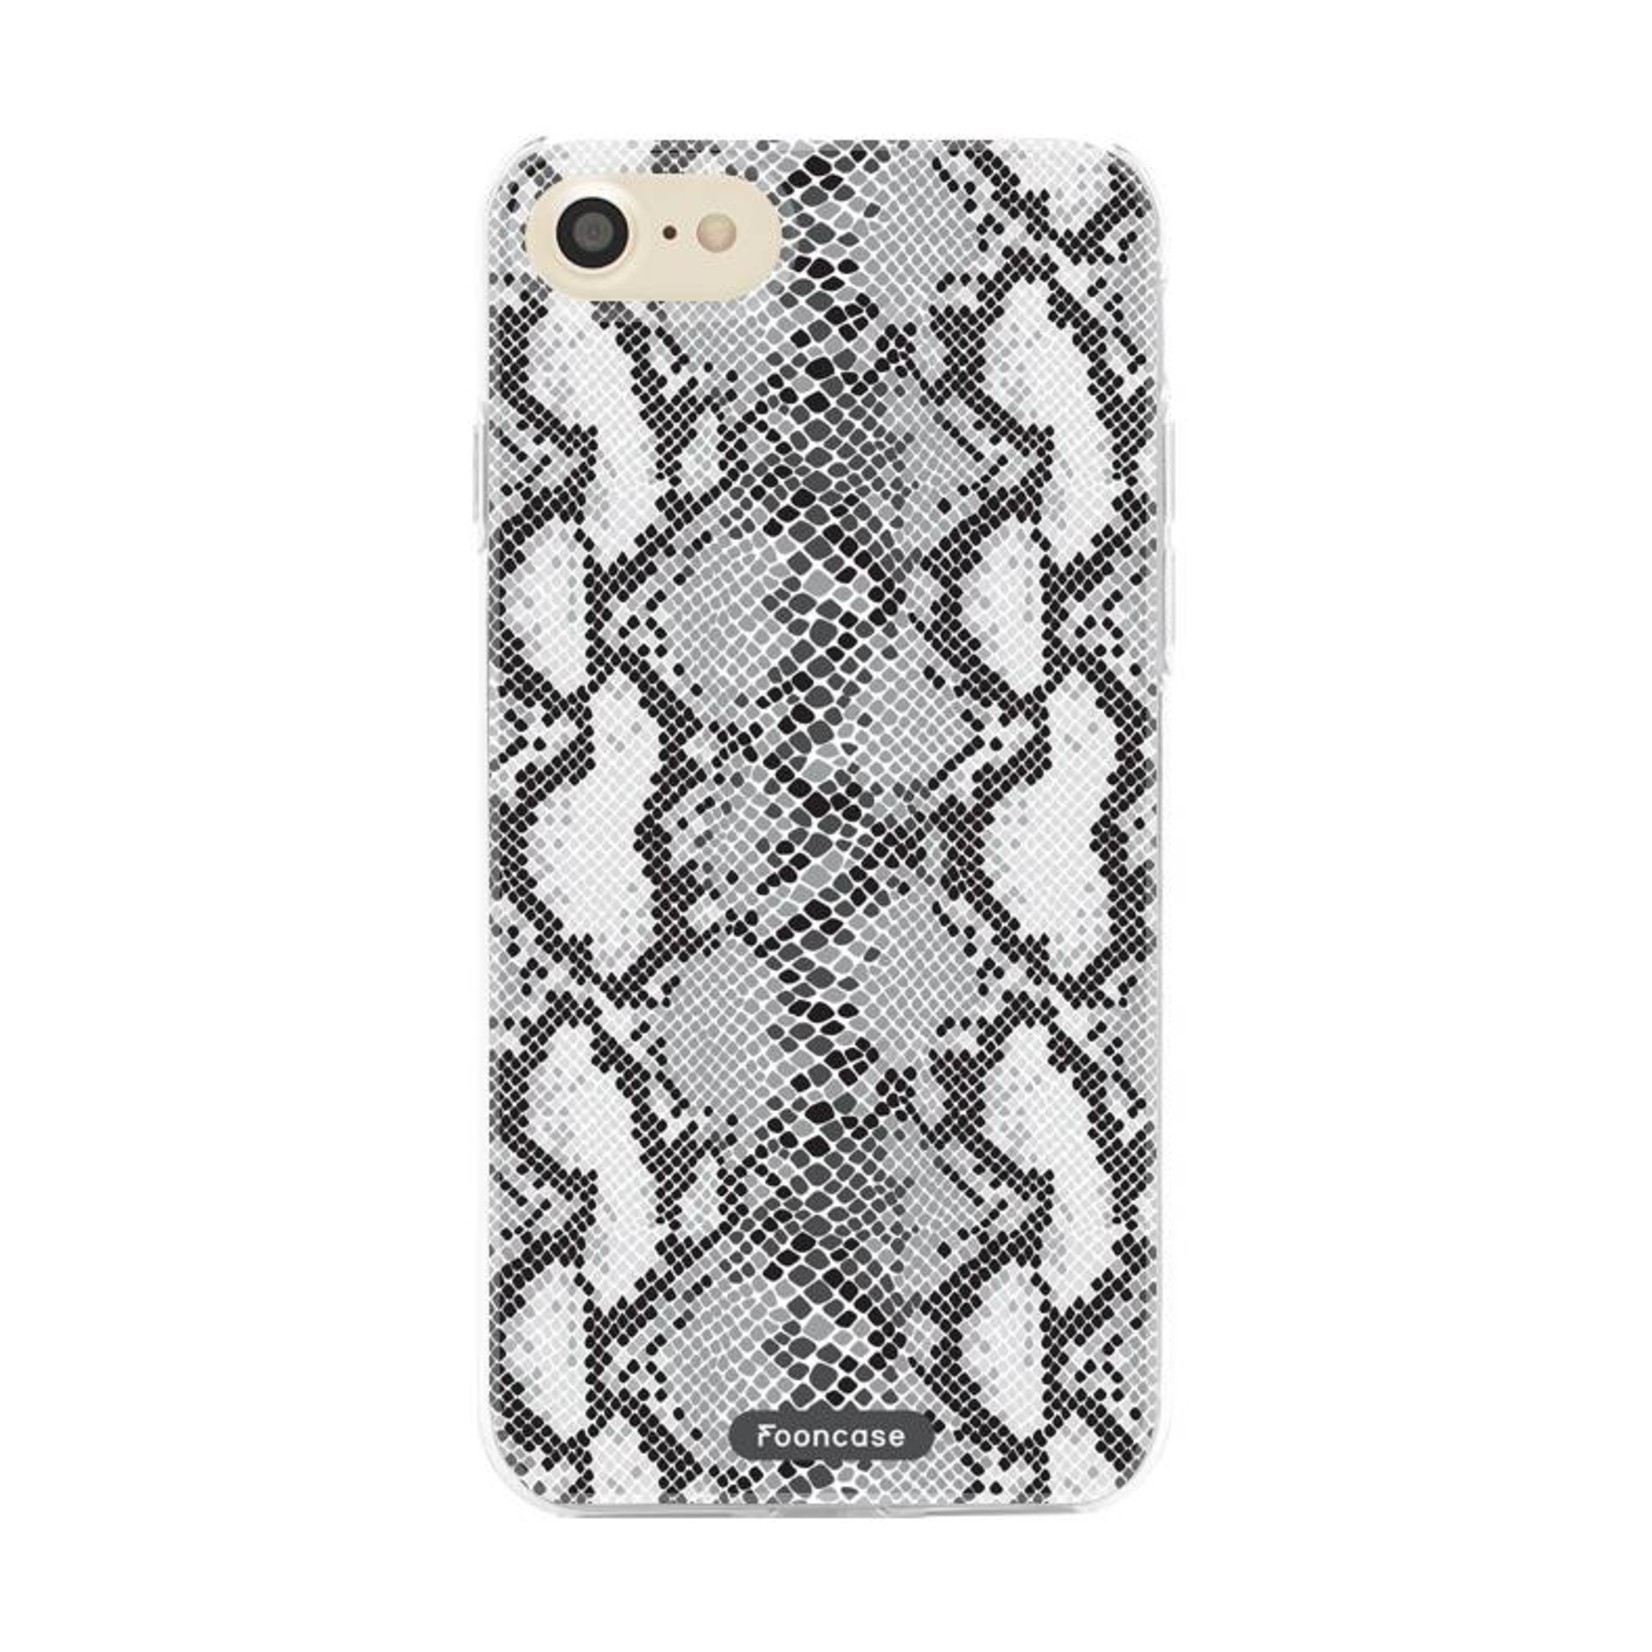 FOONCASE iPhone 8 hoesje TPU Soft Case - Back Cover - Snake it / Slangen print